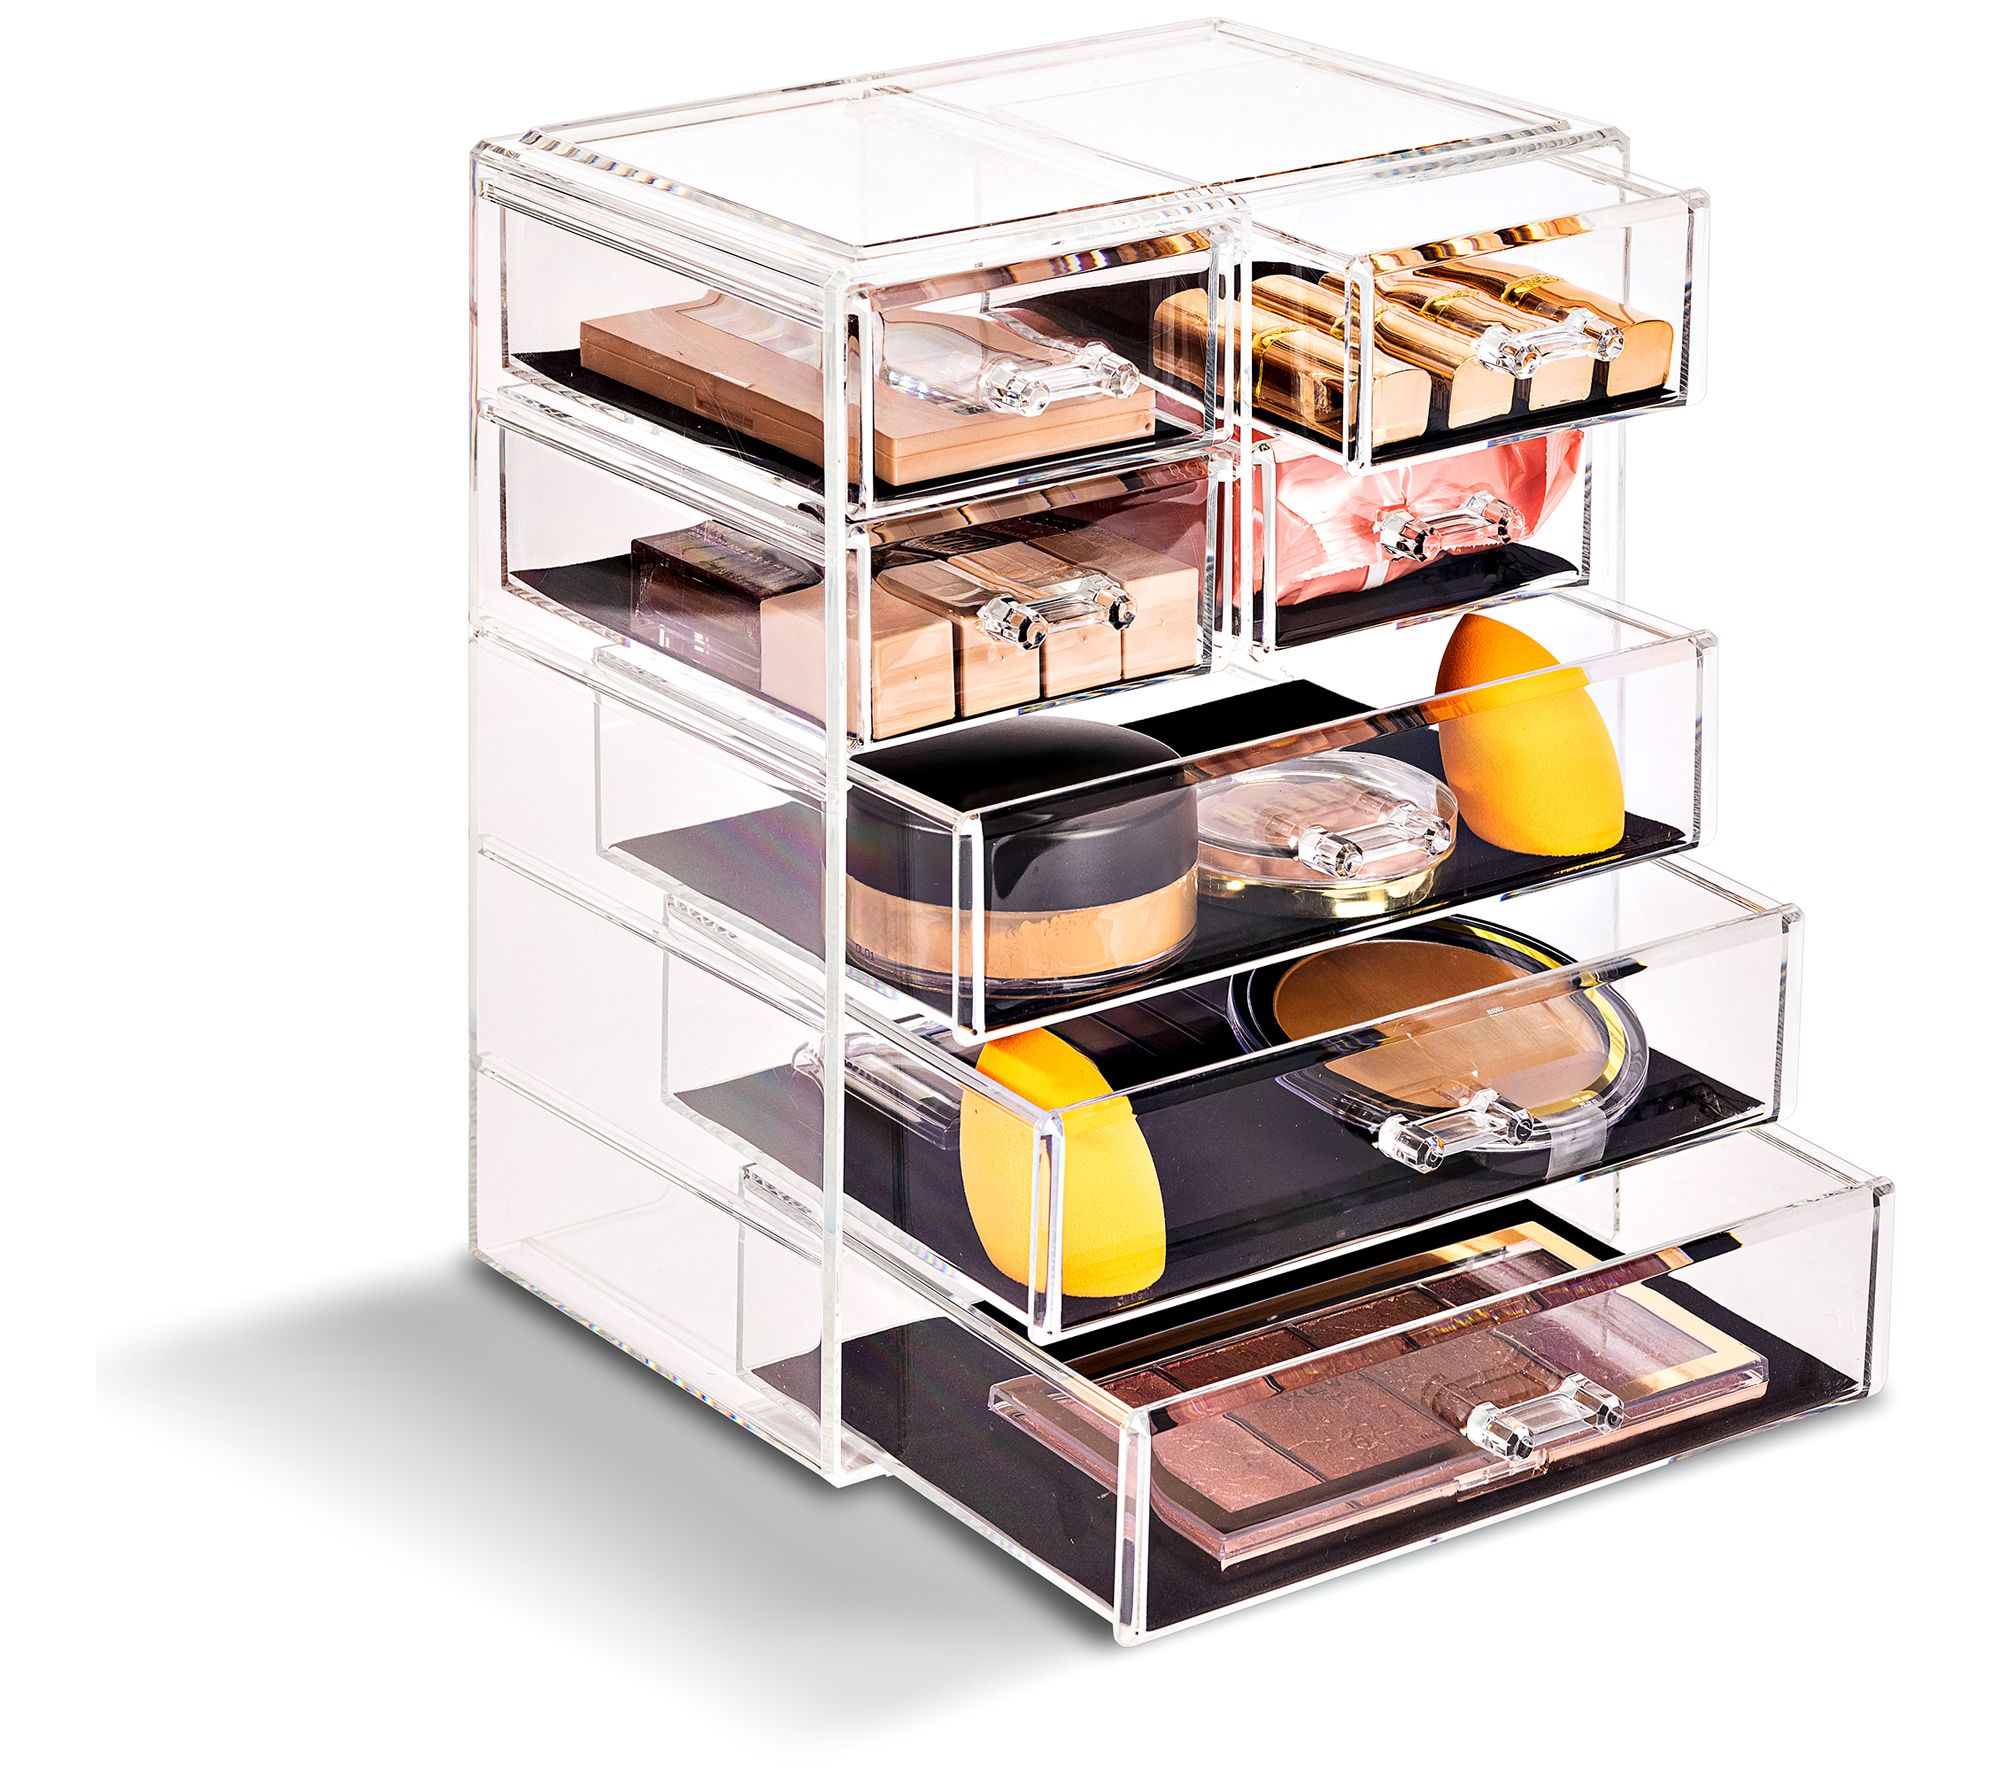 Sorbus Makeup Storage Case - Style 2 - Brown